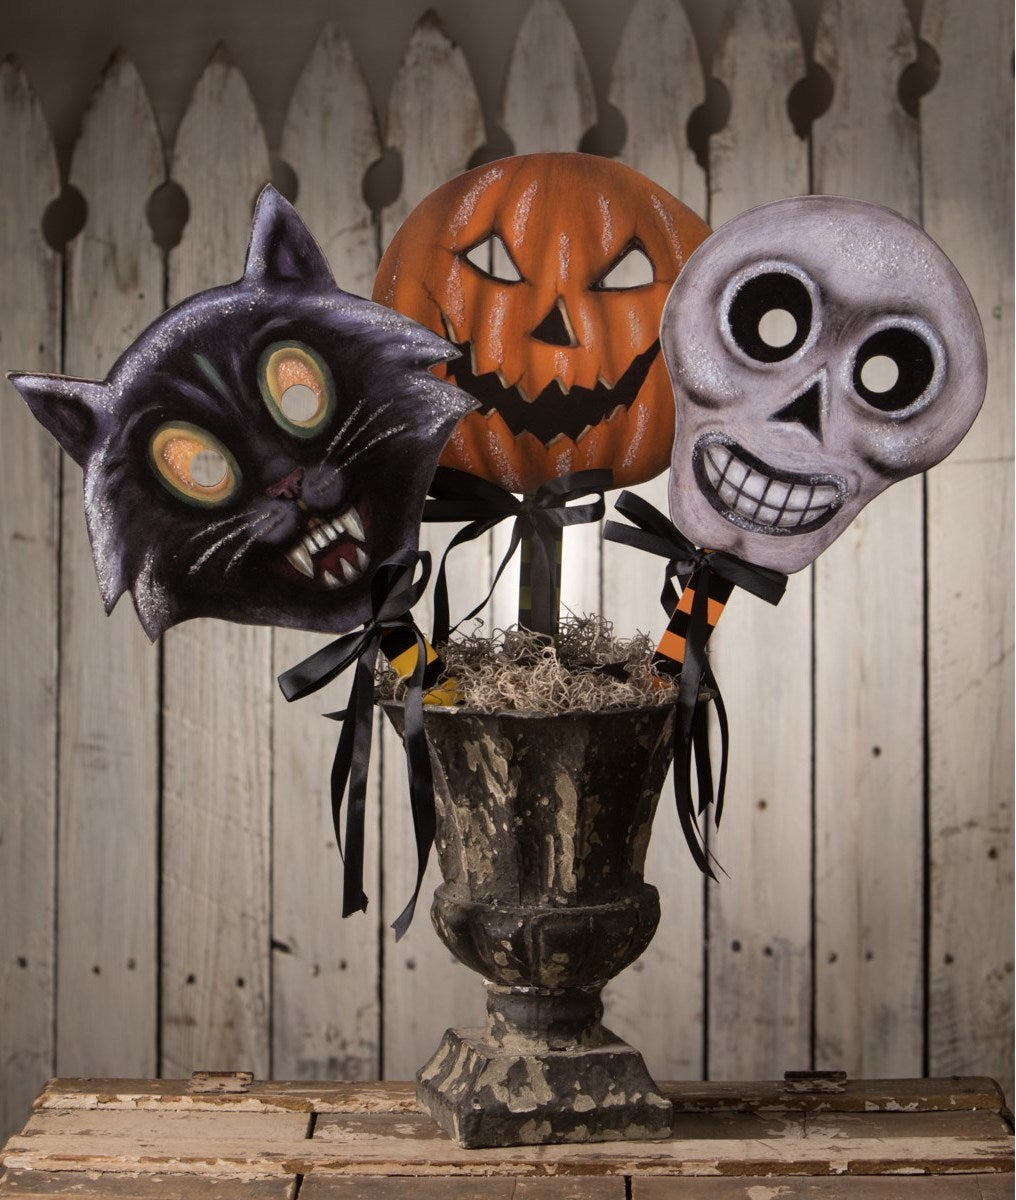 Scaredy Cat, Jack O' Lantern, & Skull Mask Halloween Decorations